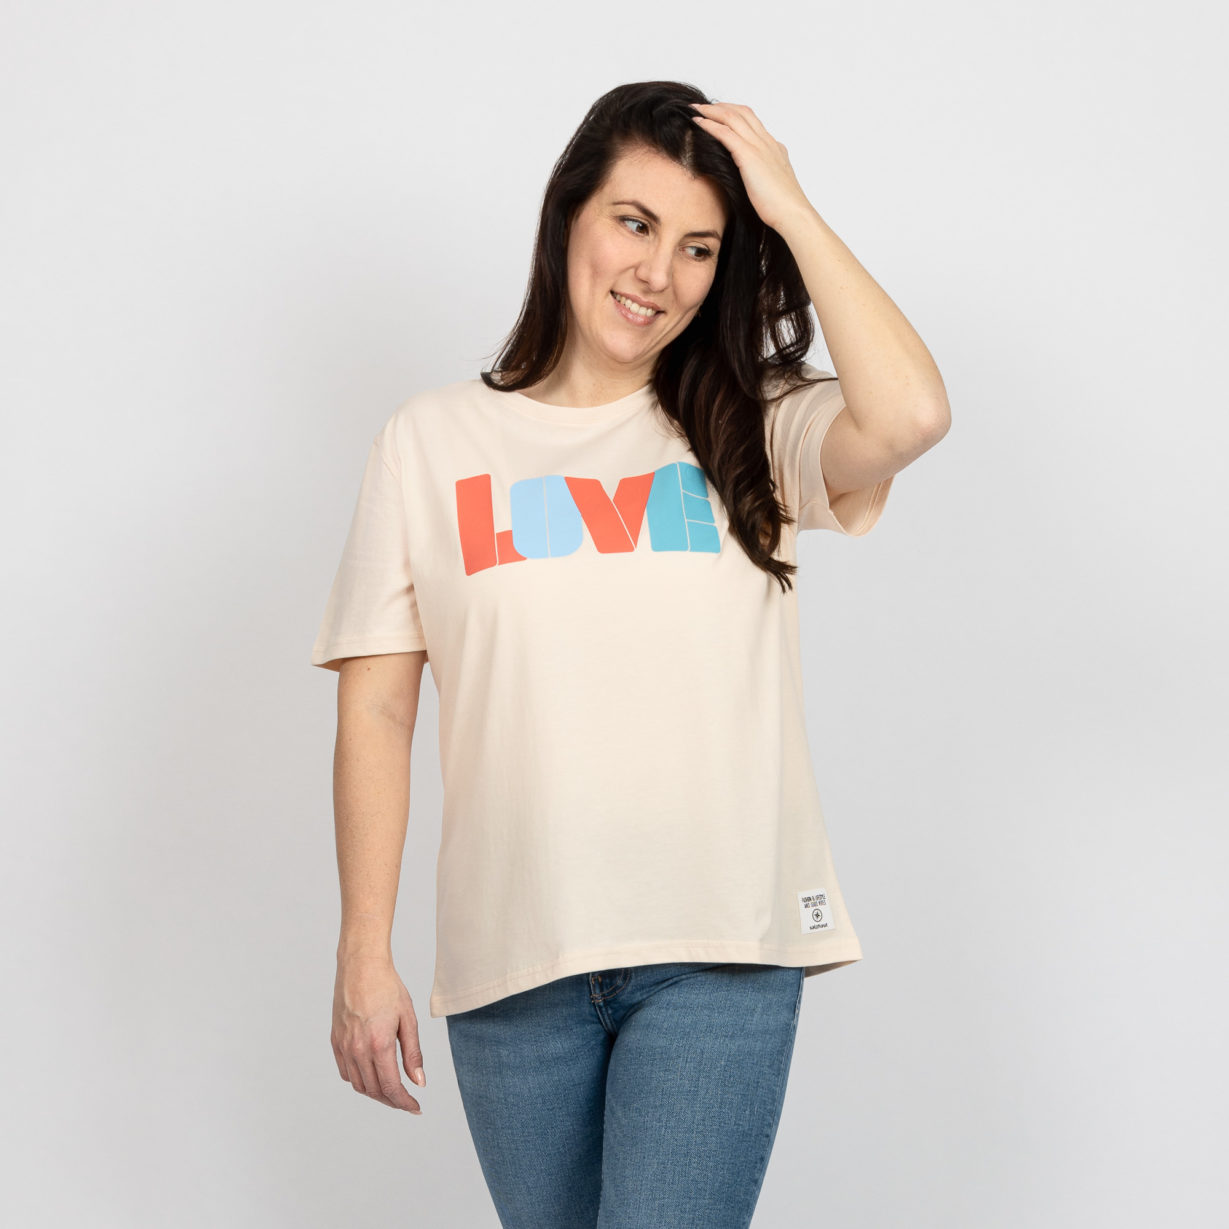 Käies T-Shirt Relaxed Shape mit LOVE Print